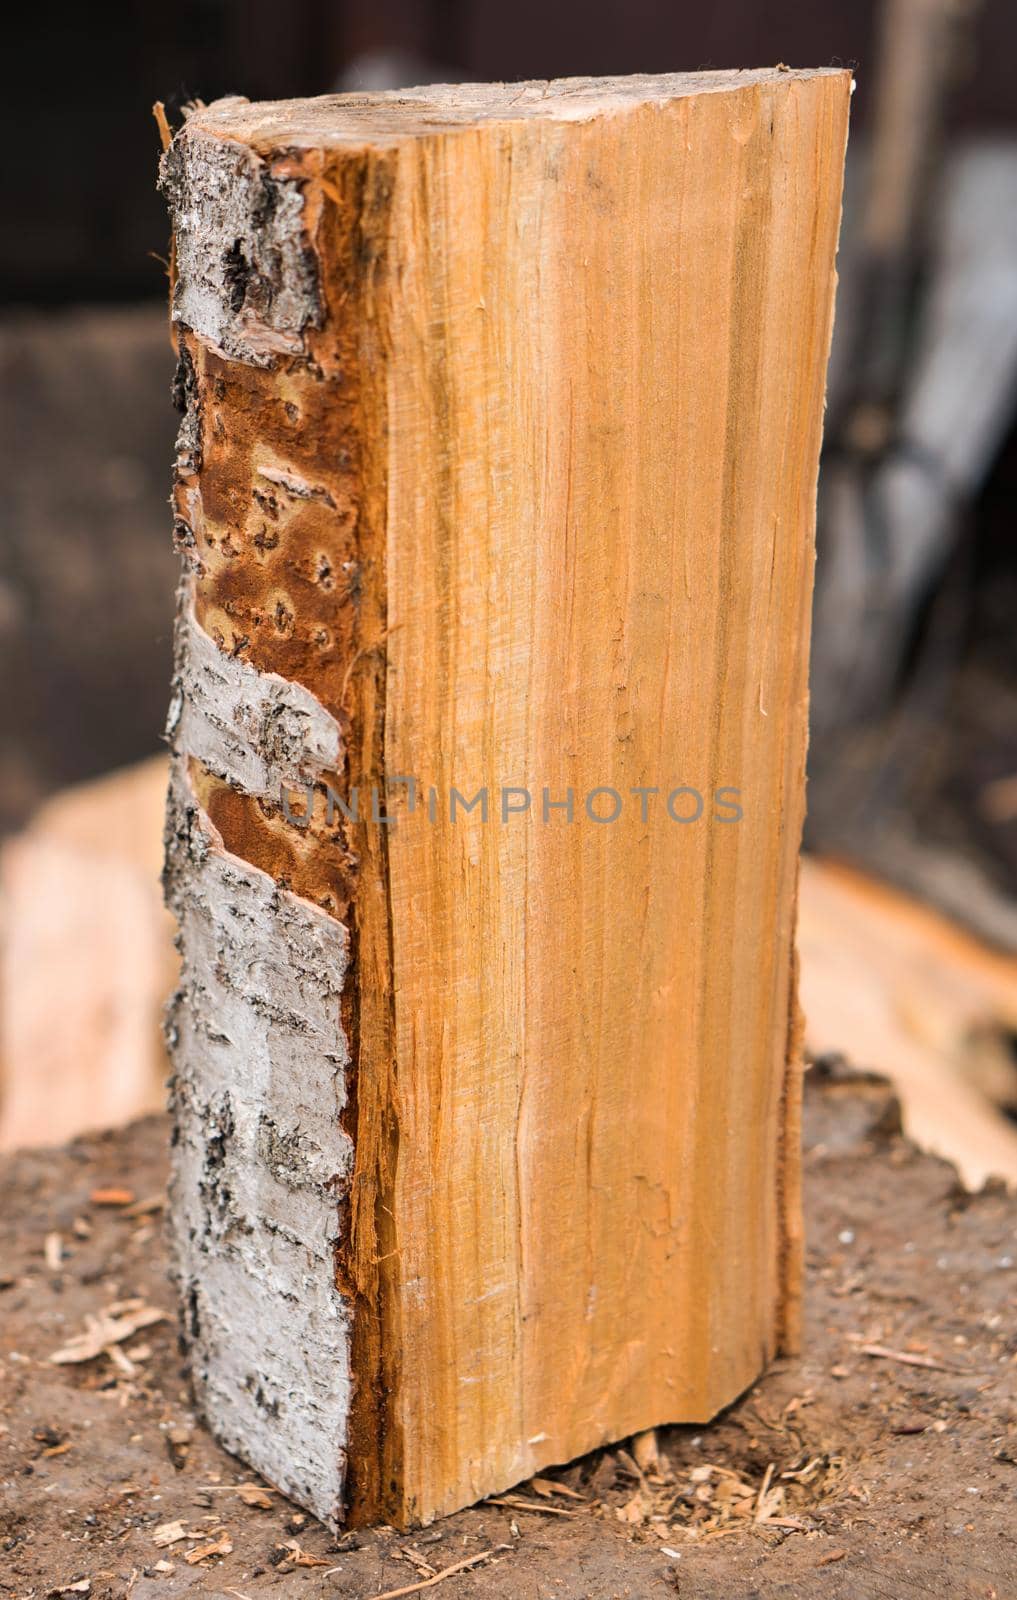 wood log, part of a chipped wood log close-up